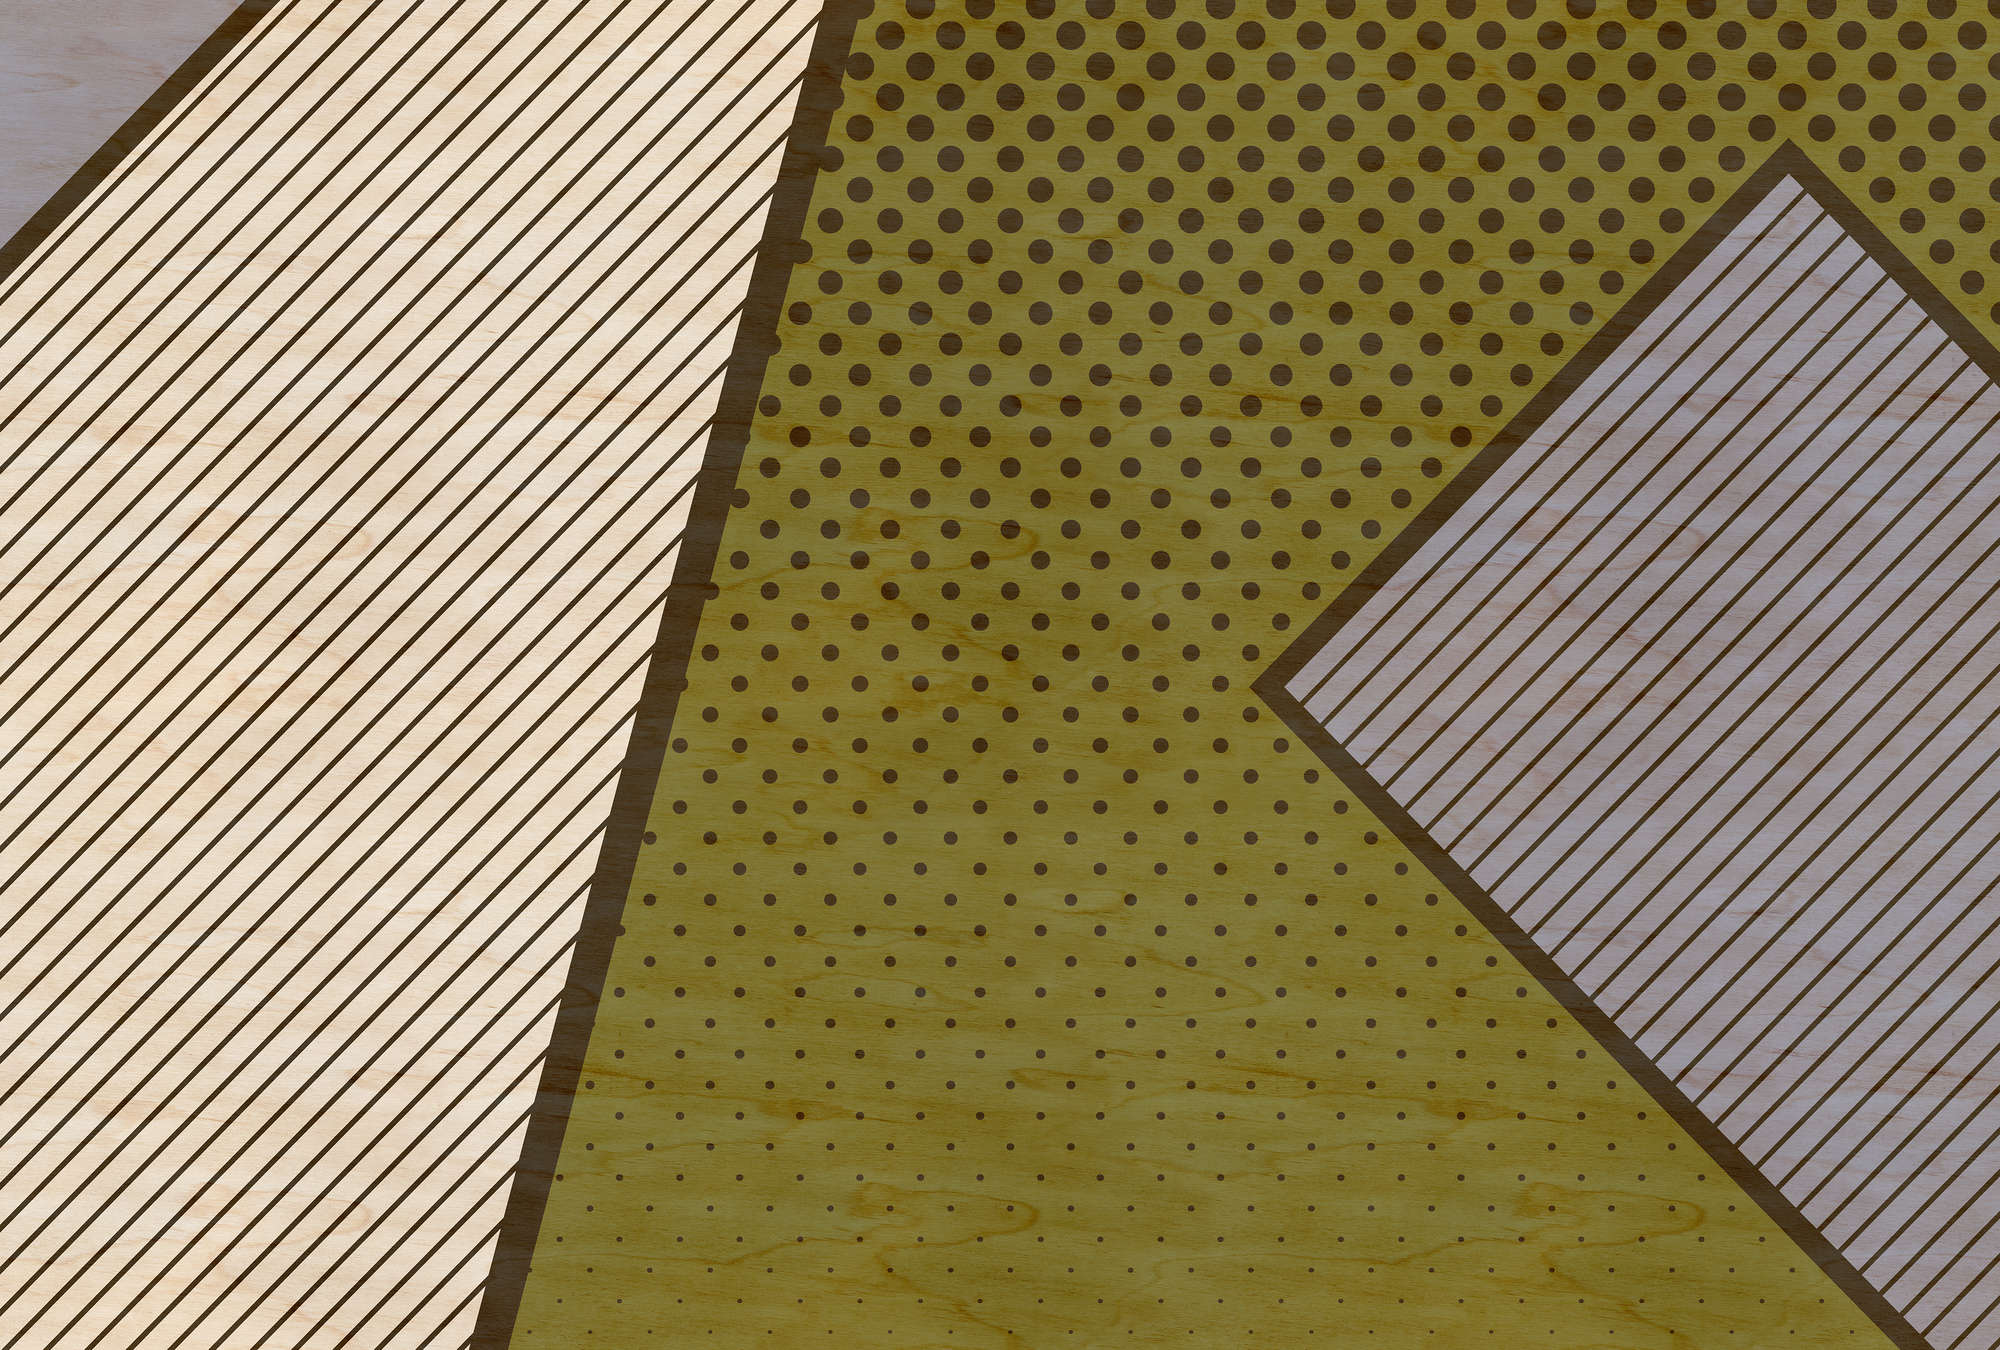             Bird gang 2 - Photo wallpaper, modern pattern in pop art style - plywood structure - Beige, Yellow | Premium smooth fleece
        